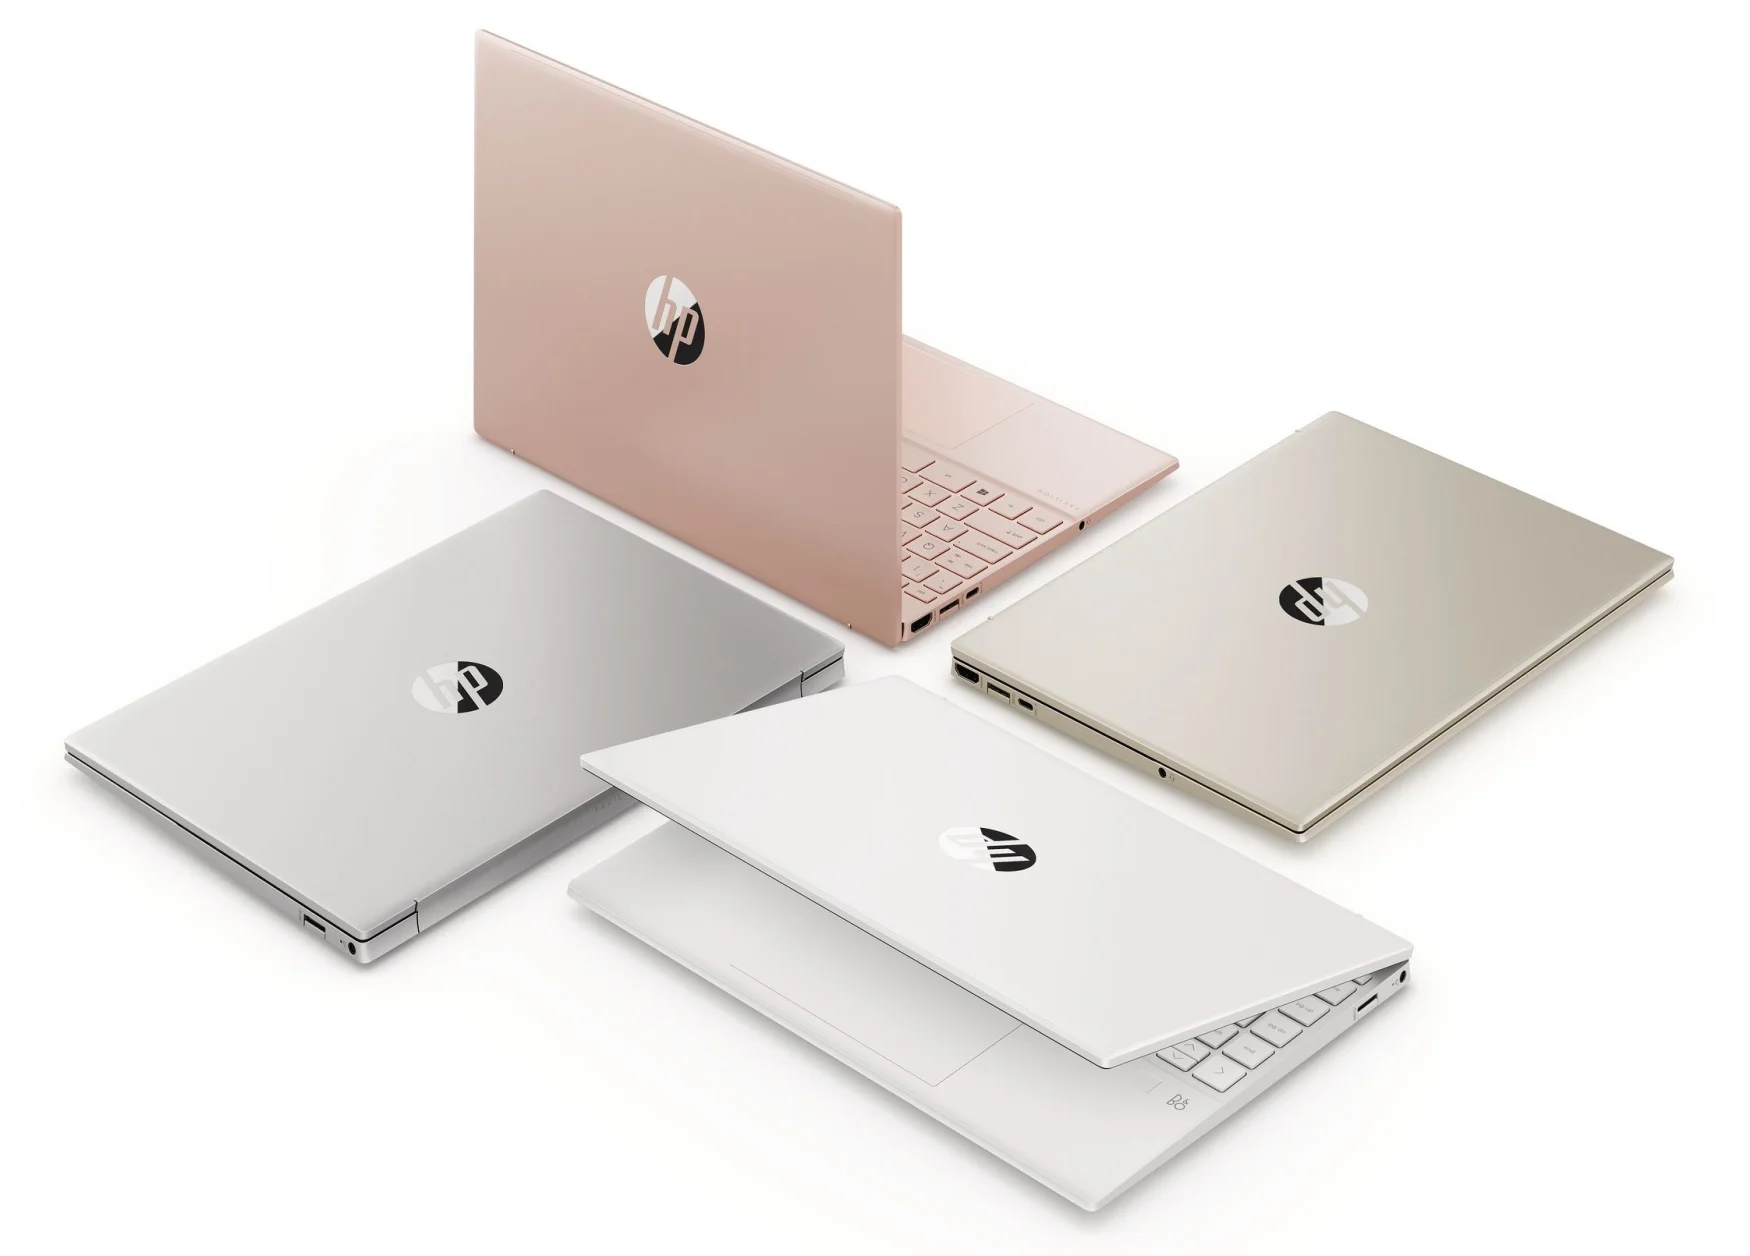 HP's Pavilion Aero is its lightest consumer laptop yet | Engadget